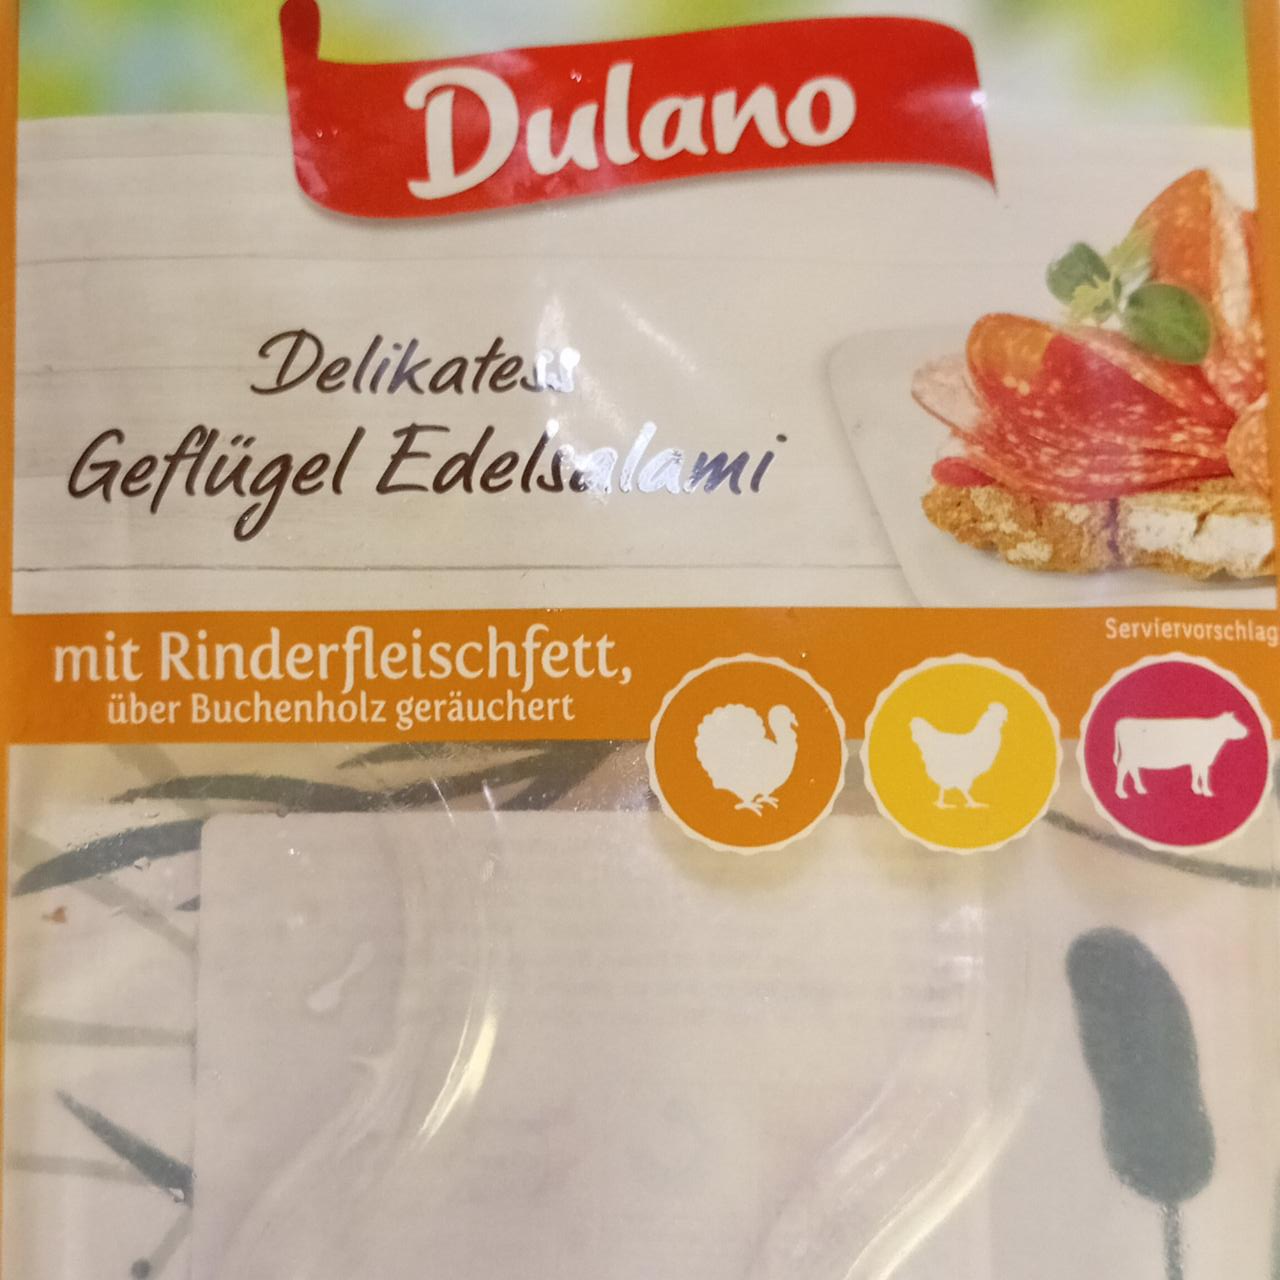 Delikatess Geflügel hodnoty geräuchert nutriční - Edelsalami mit kalorie, a Rinderfleischfett Dulano kJ